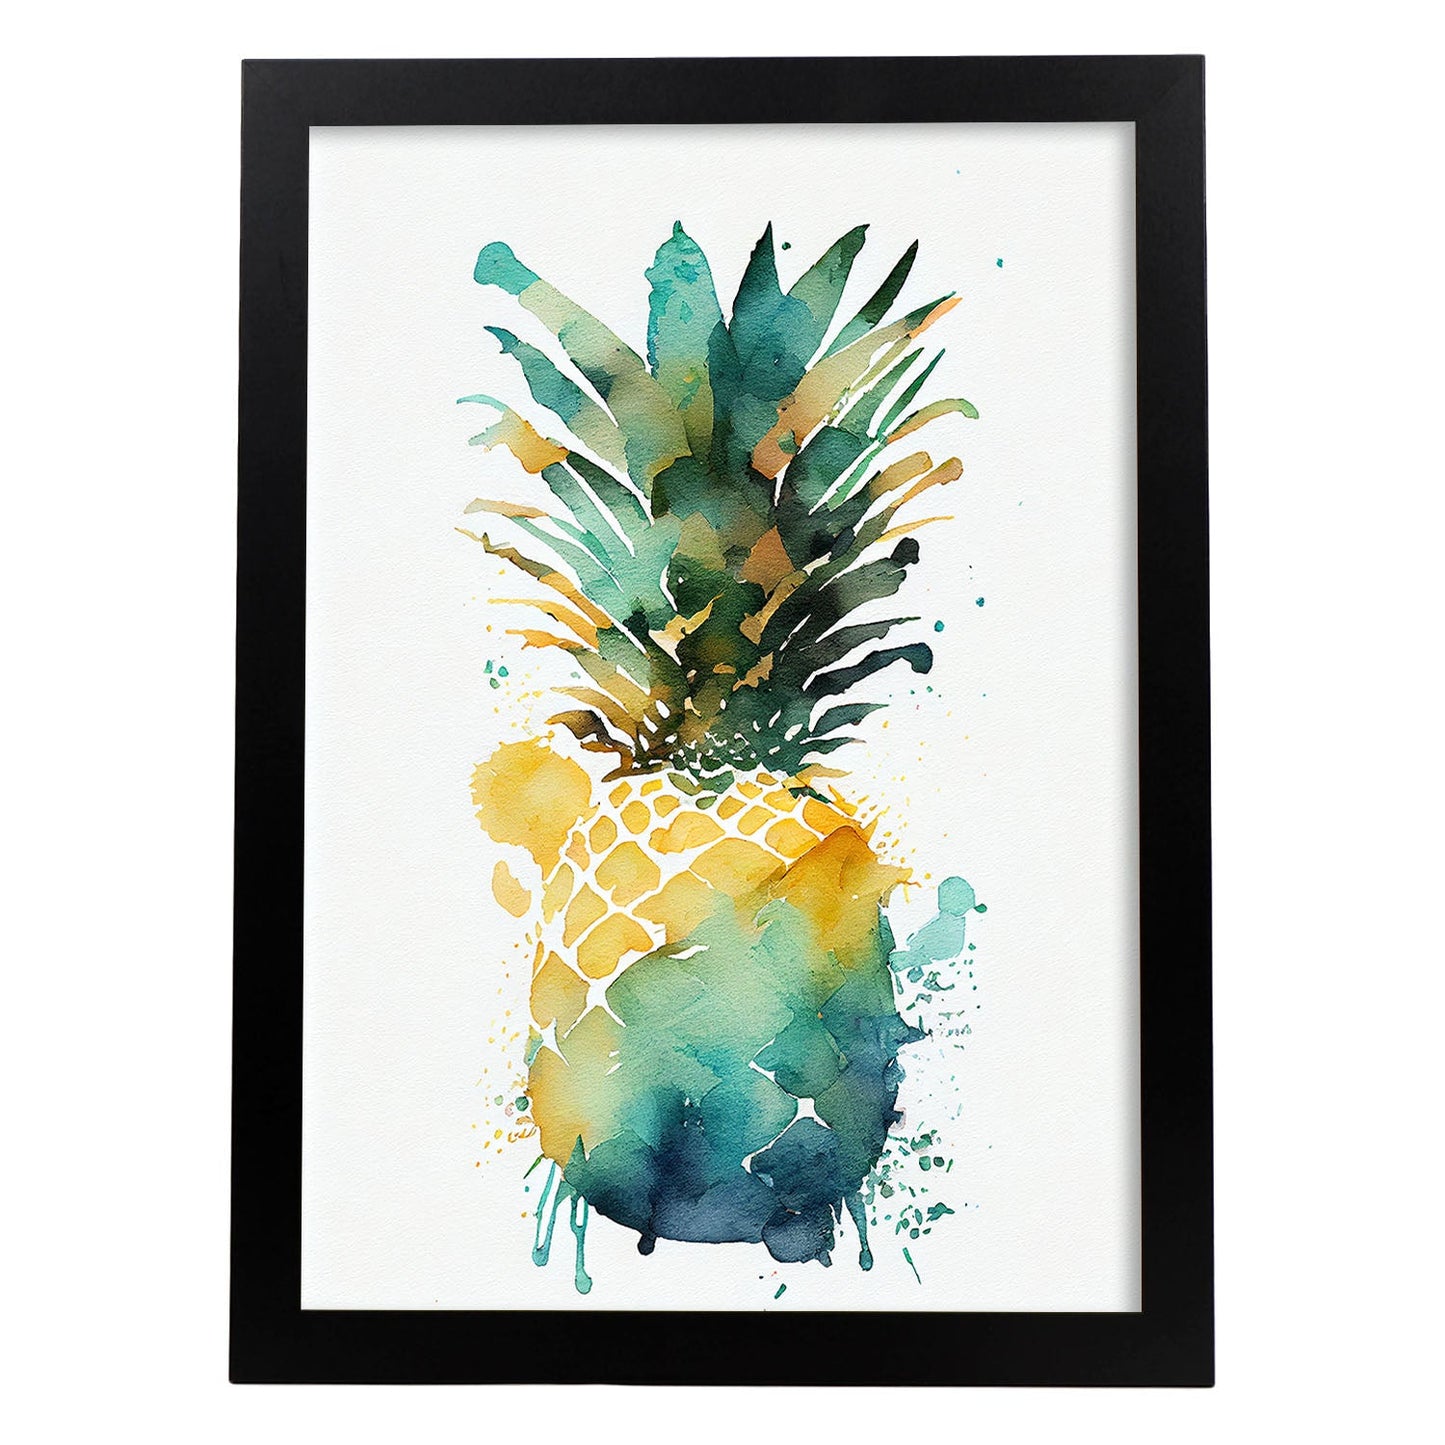 Nacnic minimalist Pineapple_1. Aesthetic Wall Art Prints for Bedroom or Living Room Design.